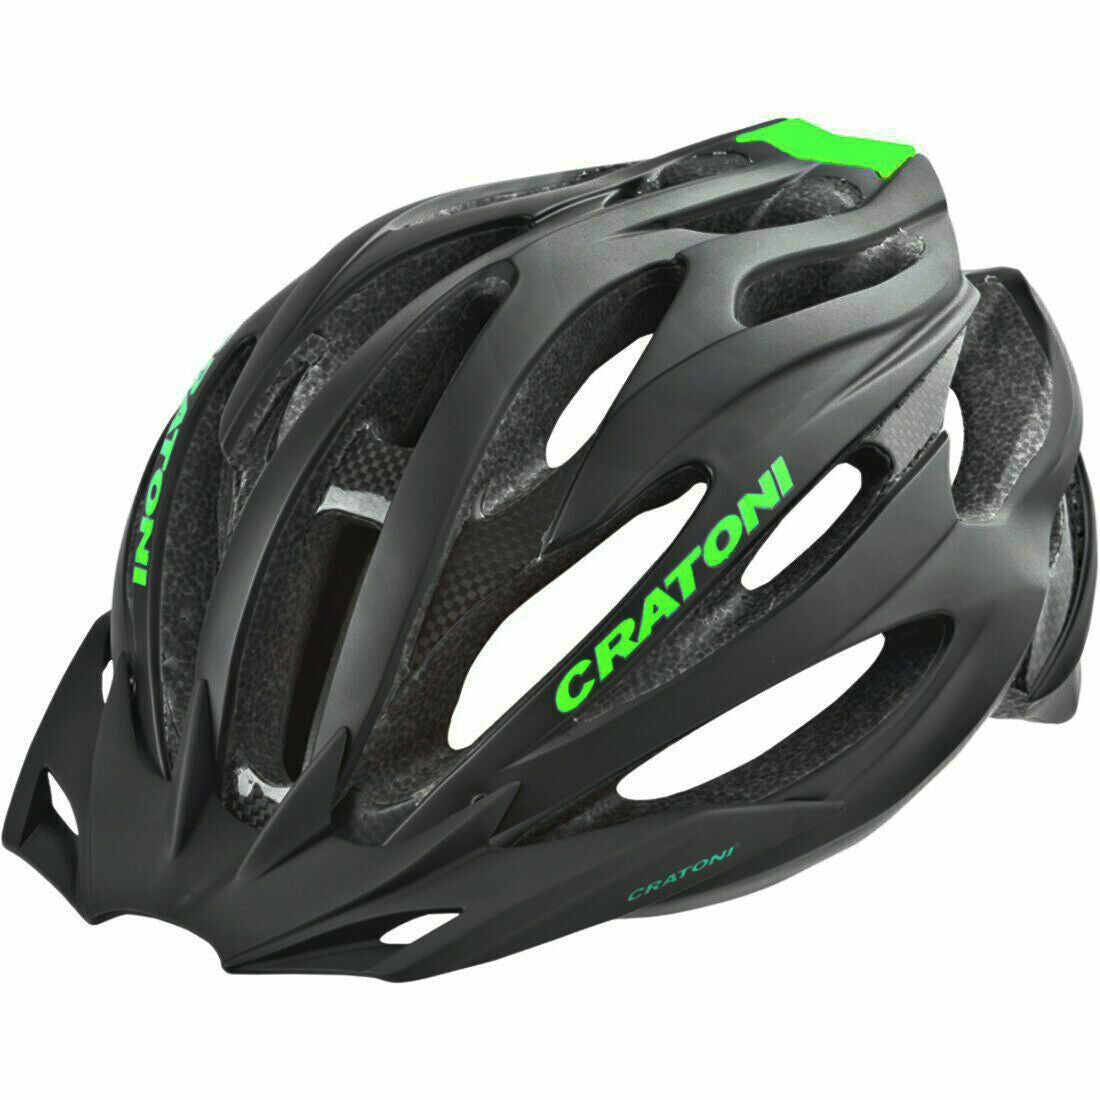 Light Weight Cratoni C-Limit Carbon Helmet Carbo Wing Technology - S/M 56-59cm - Sportandleisure.com (6968080367770)